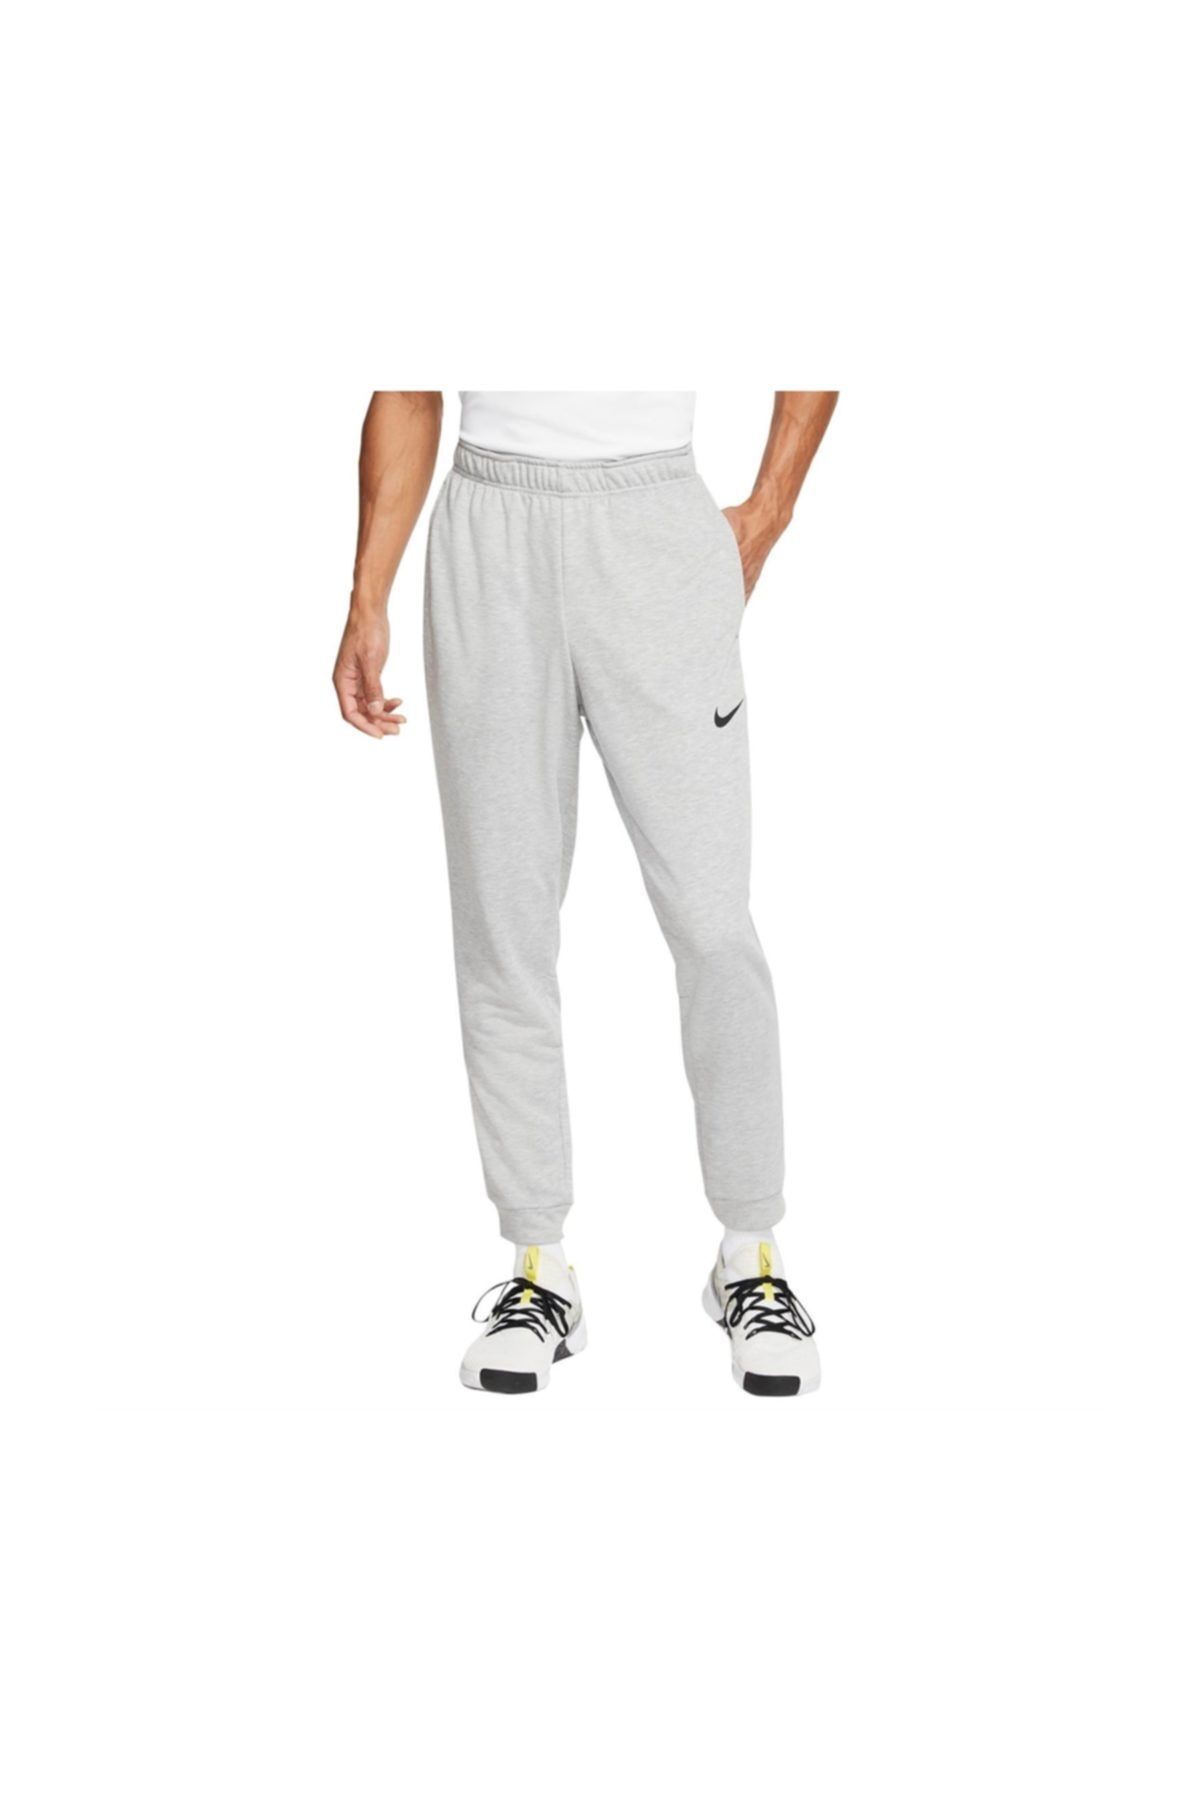 Men's Nike Casual Sports Jogging Long Pants/Trousers Black CJ4312